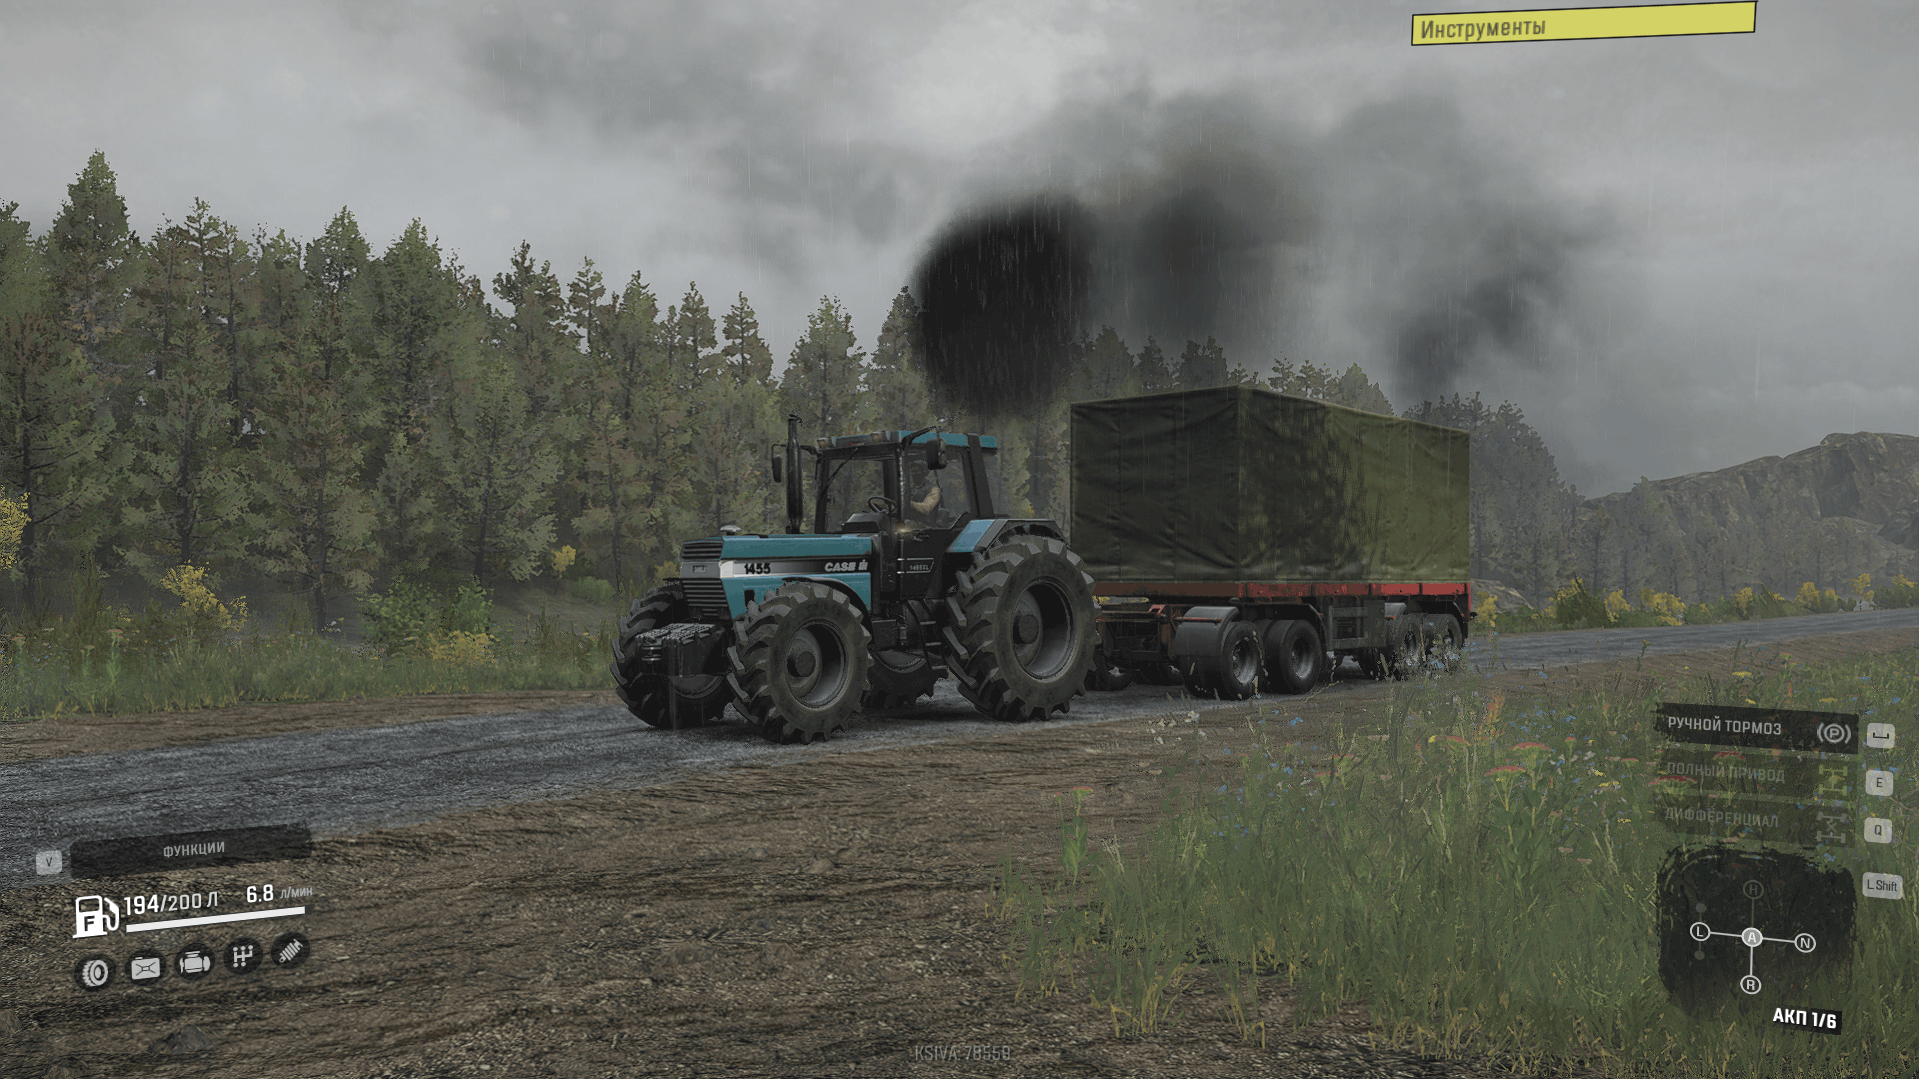 SnowRunner - Case Ih 1455 XL Tractor V1.0